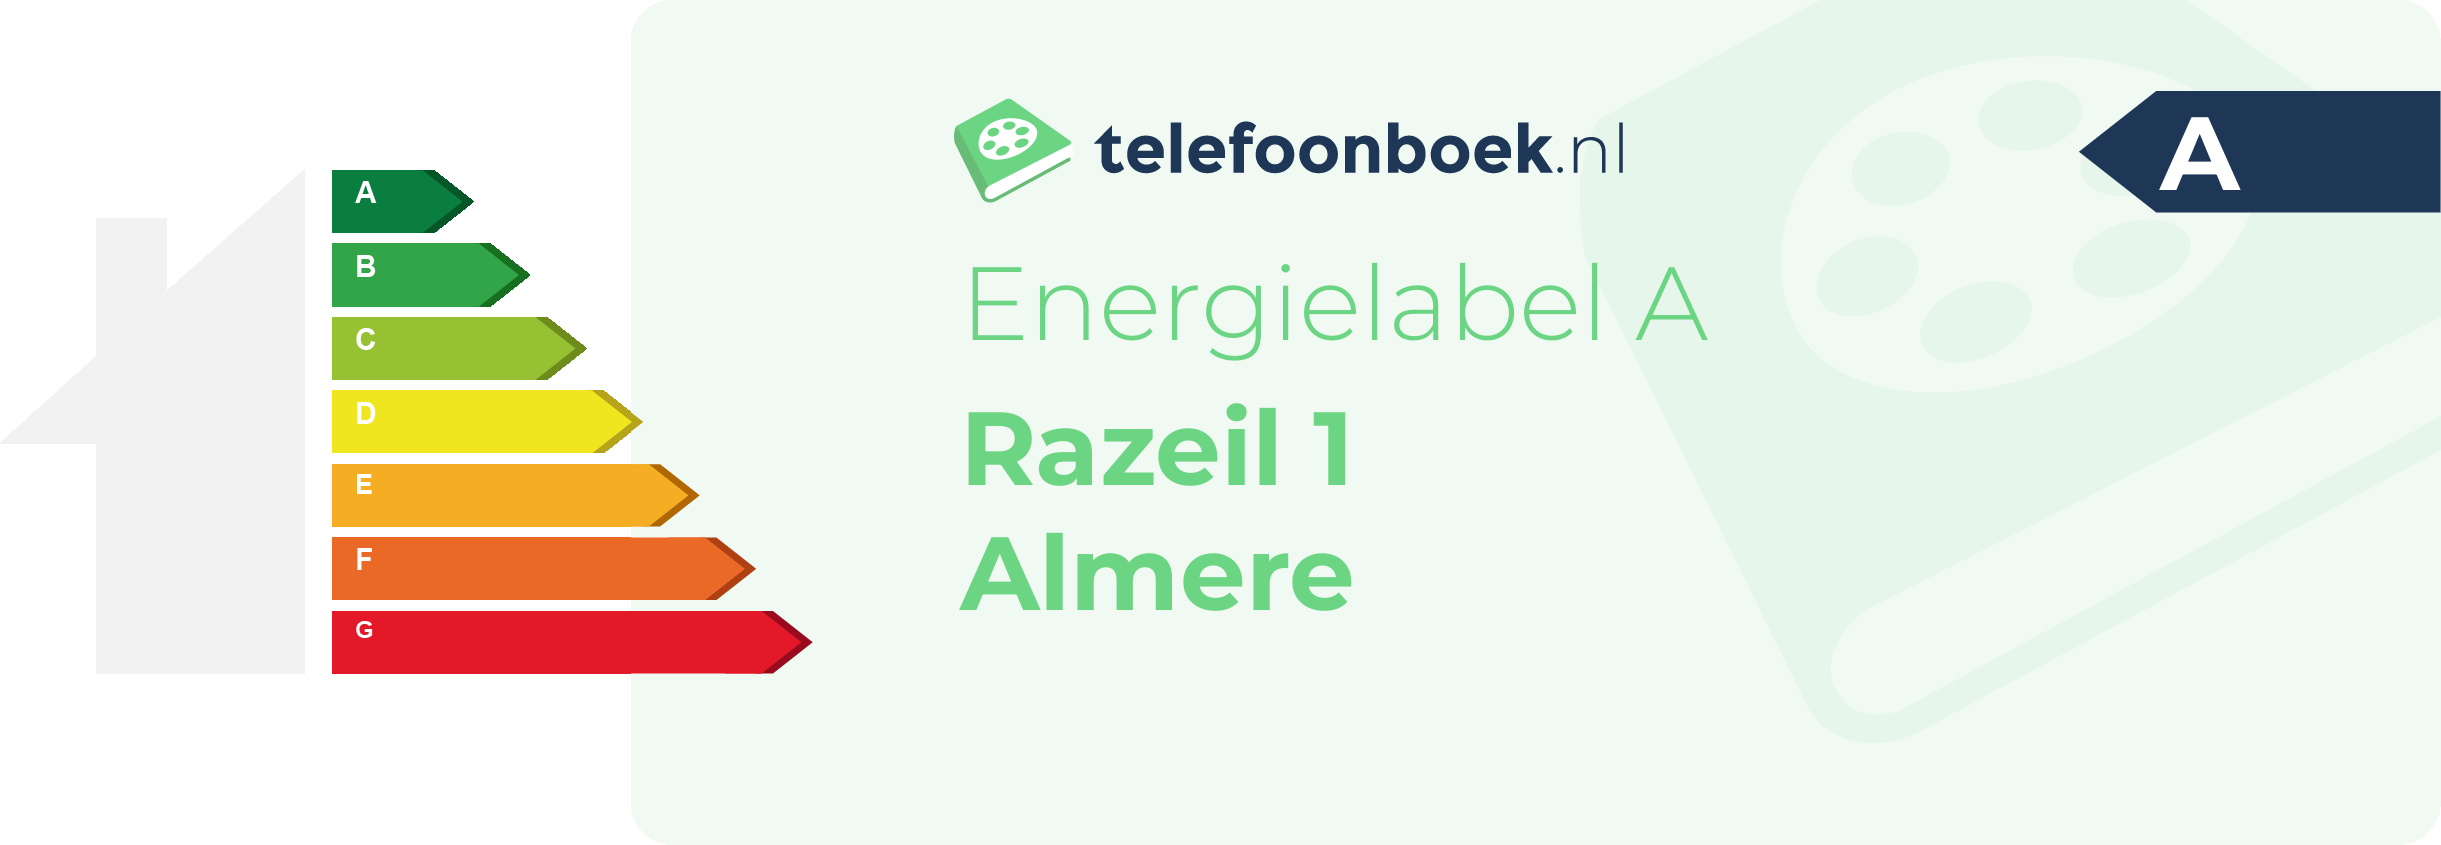 Energielabel Razeil 1 Almere